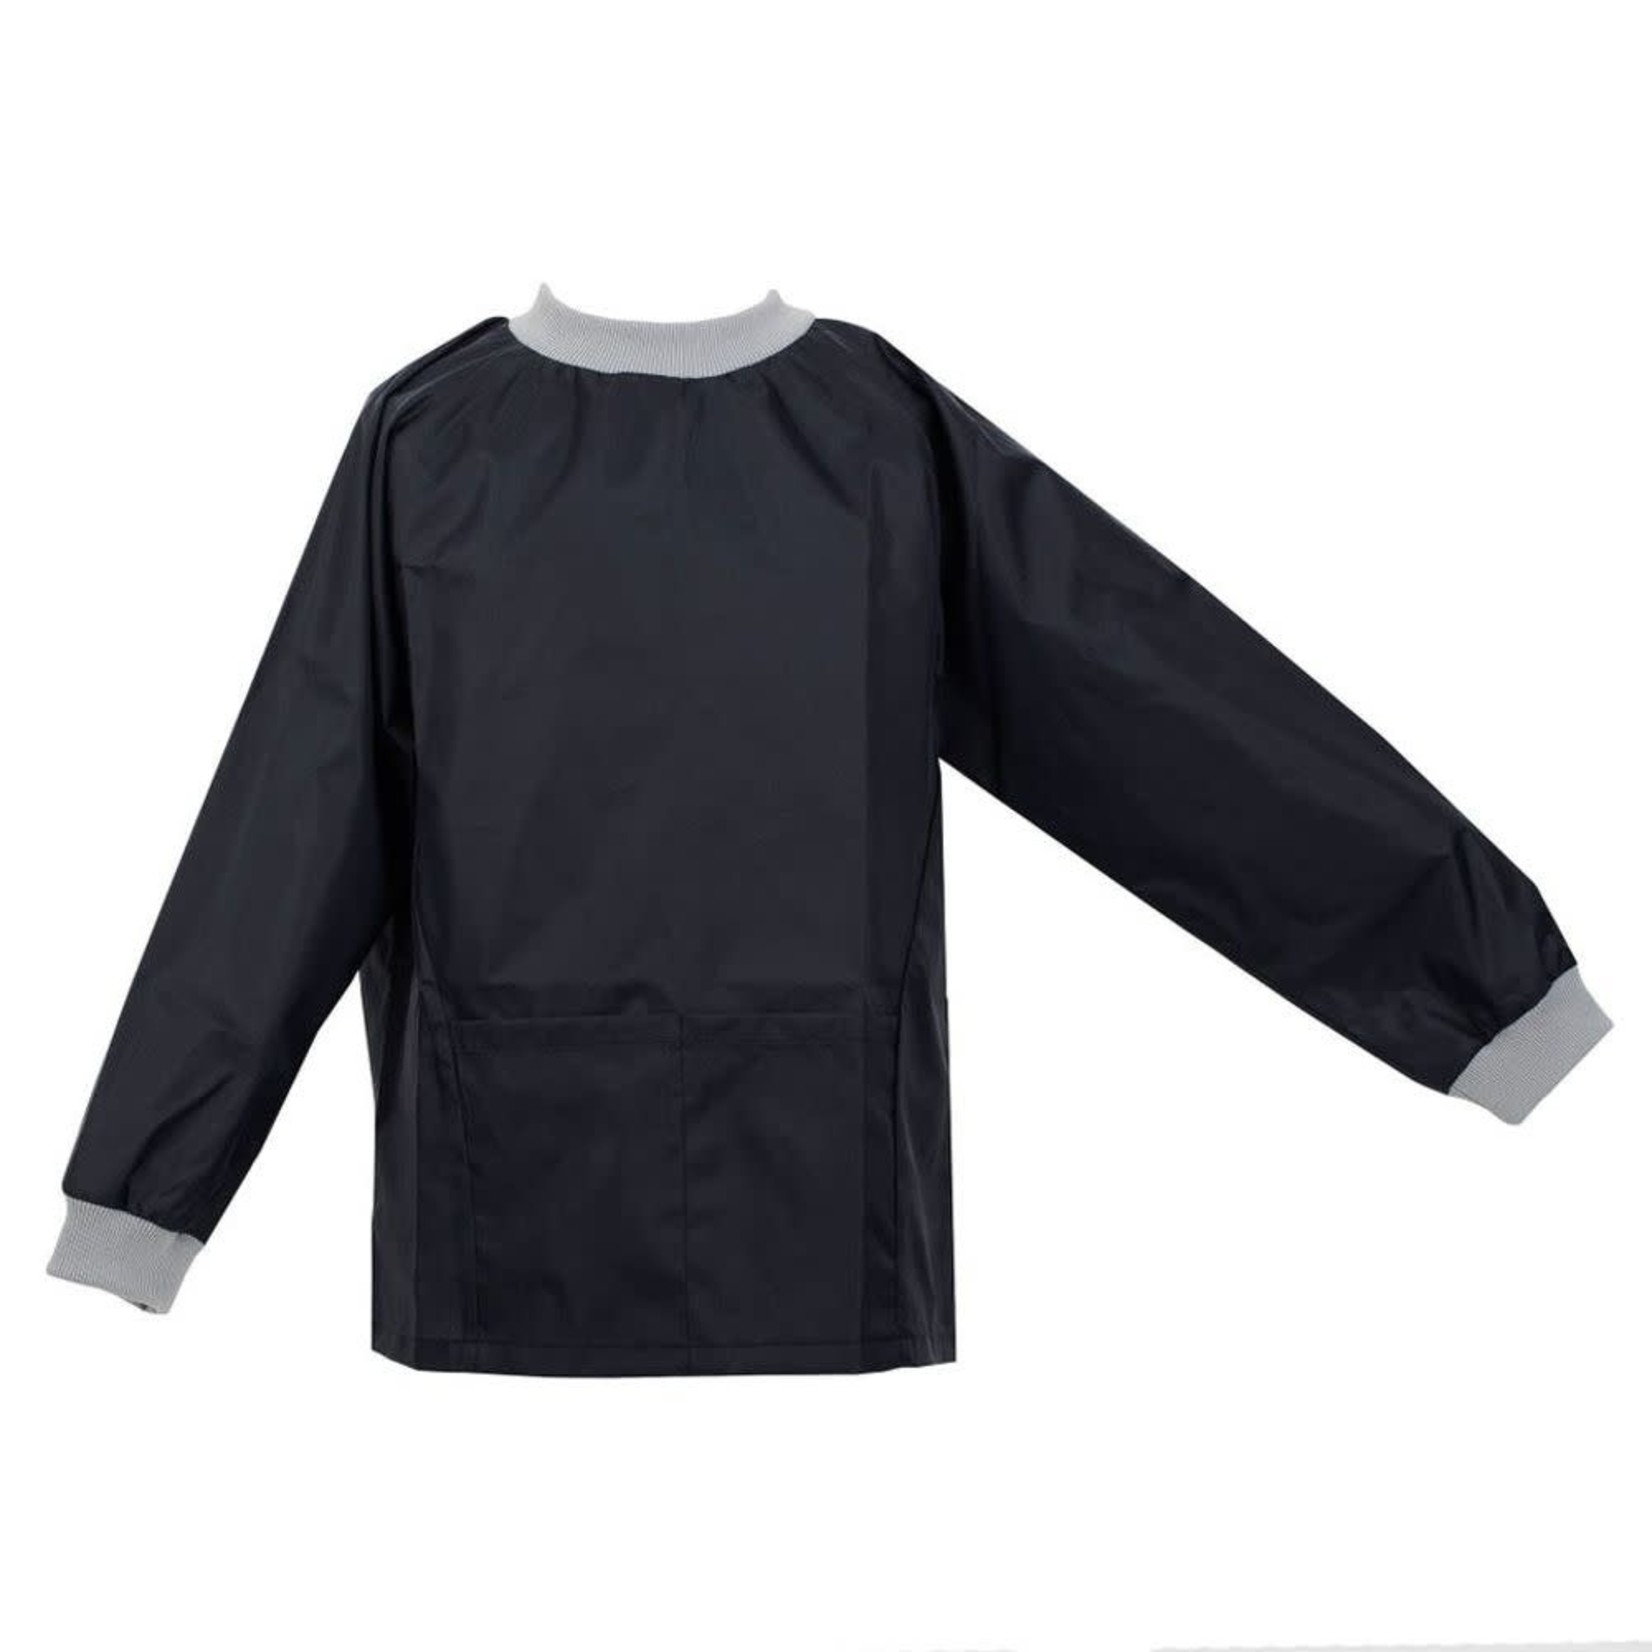 GEO-CAN - Artwork apron - Black - Size 4